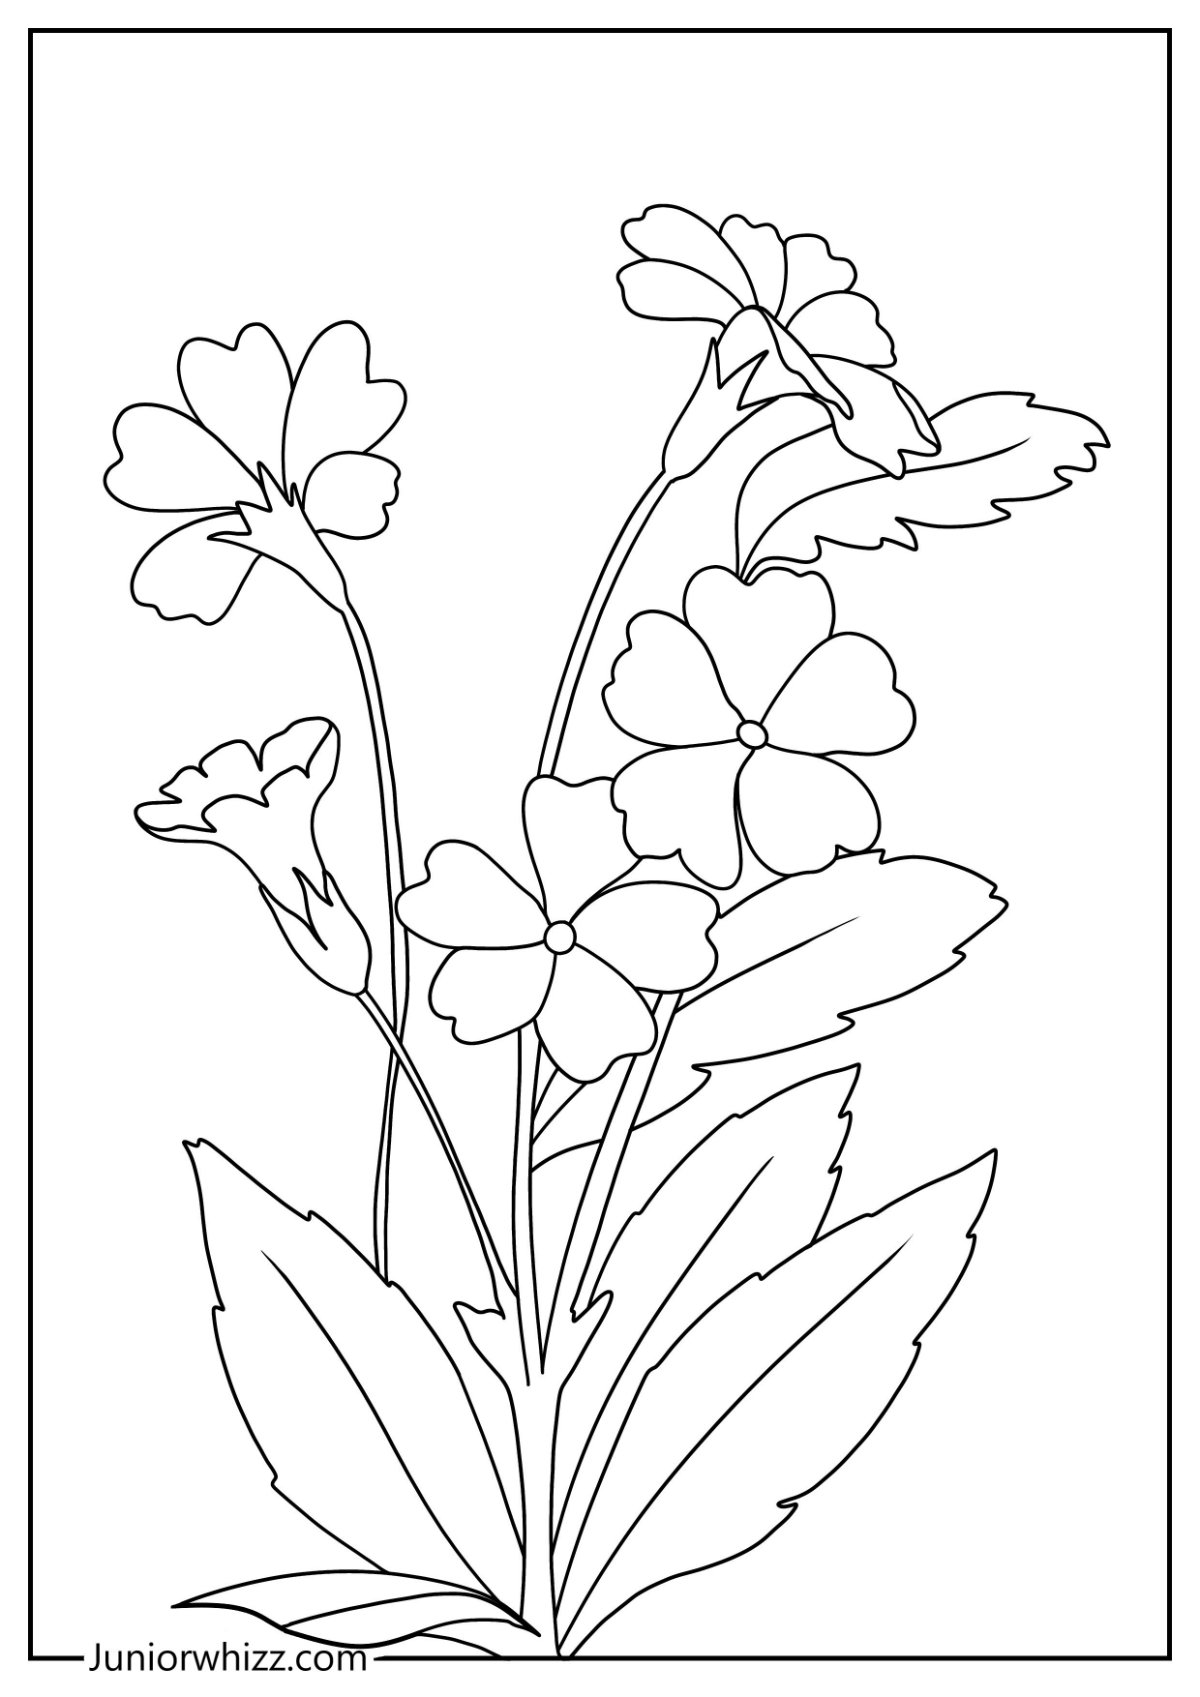 Flower Drawing Images - Free Download on Freepik-saigonsouth.com.vn